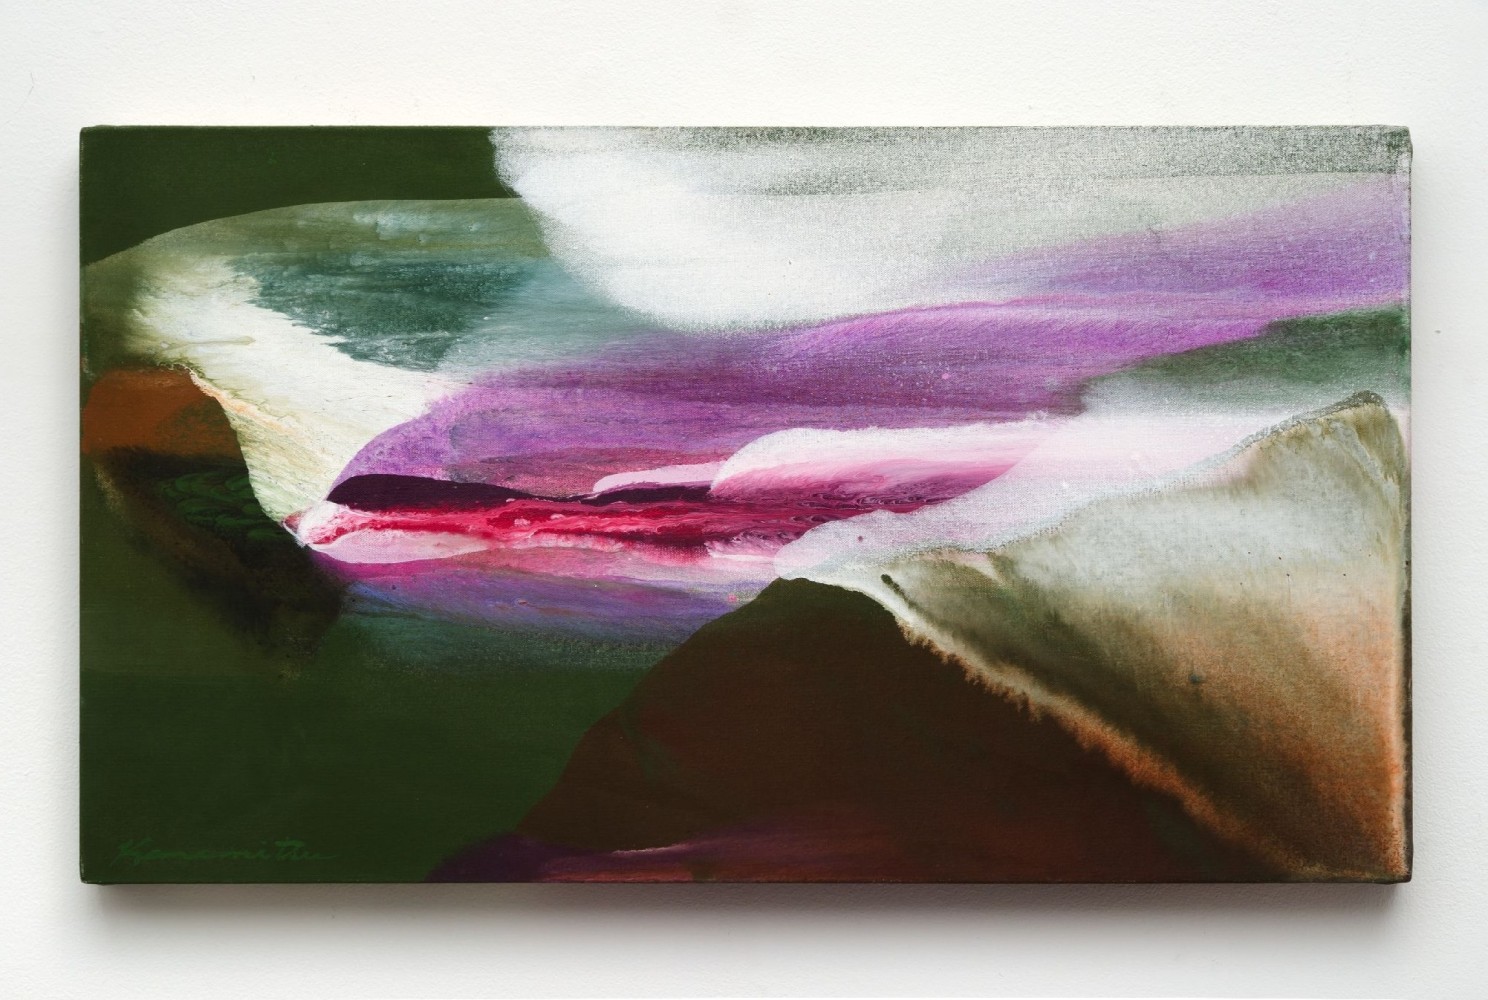 Matsumi Kanemitsu (1922-1992)
Spring 7PM, 1986&amp;nbsp;
acrylic on canvas
18 1/4 x 32 inches; 46.4 x 81.3 centimeters
LSFA# 13997&amp;nbsp;